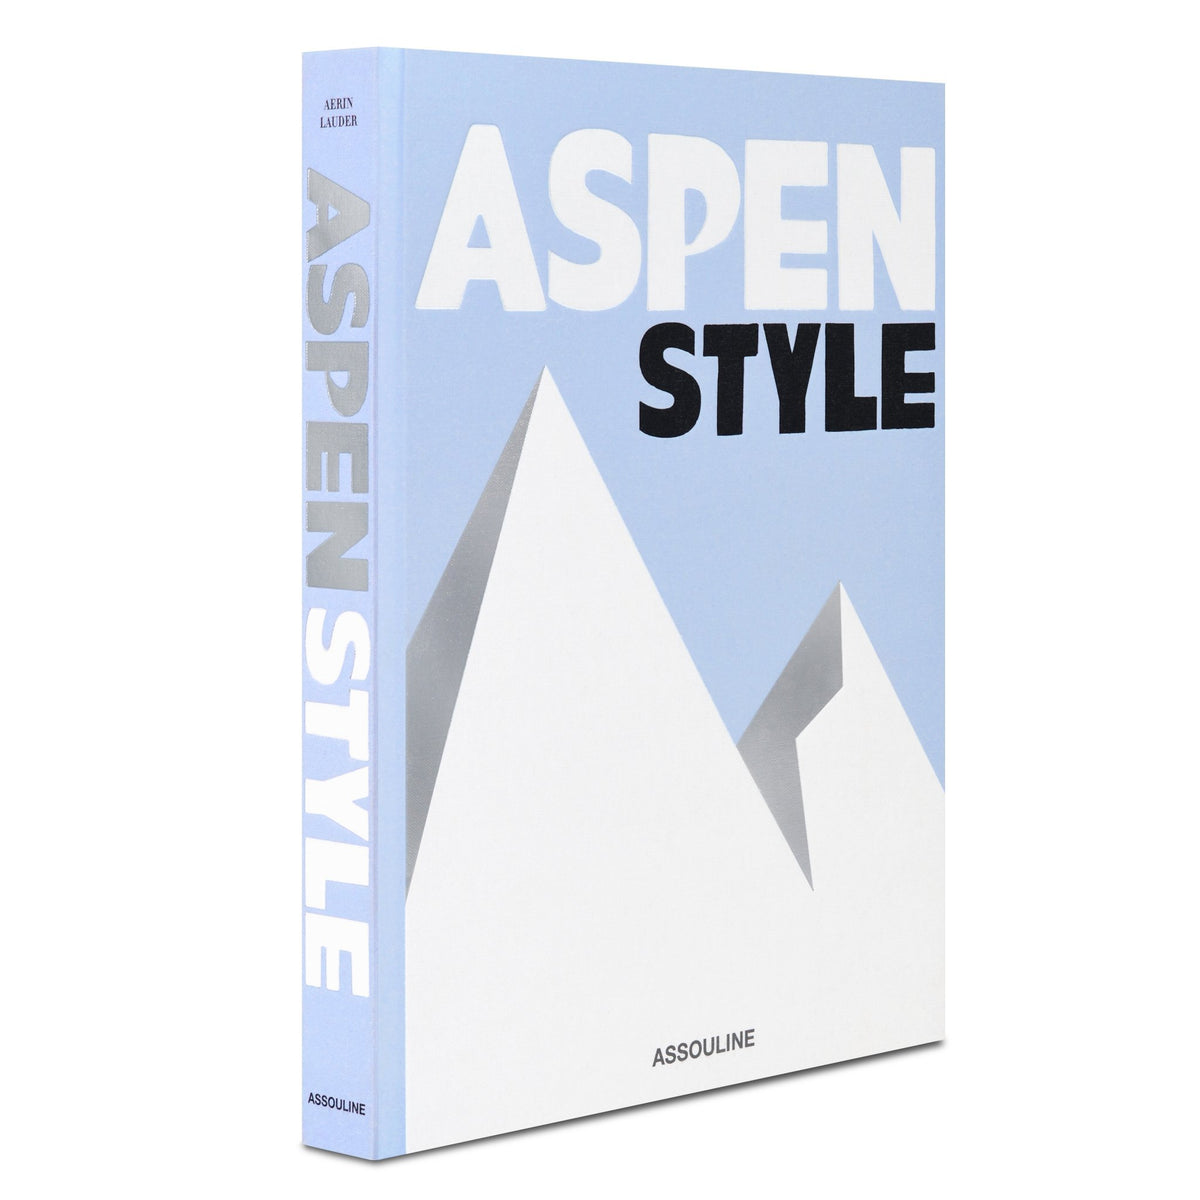 "Aspen Style"